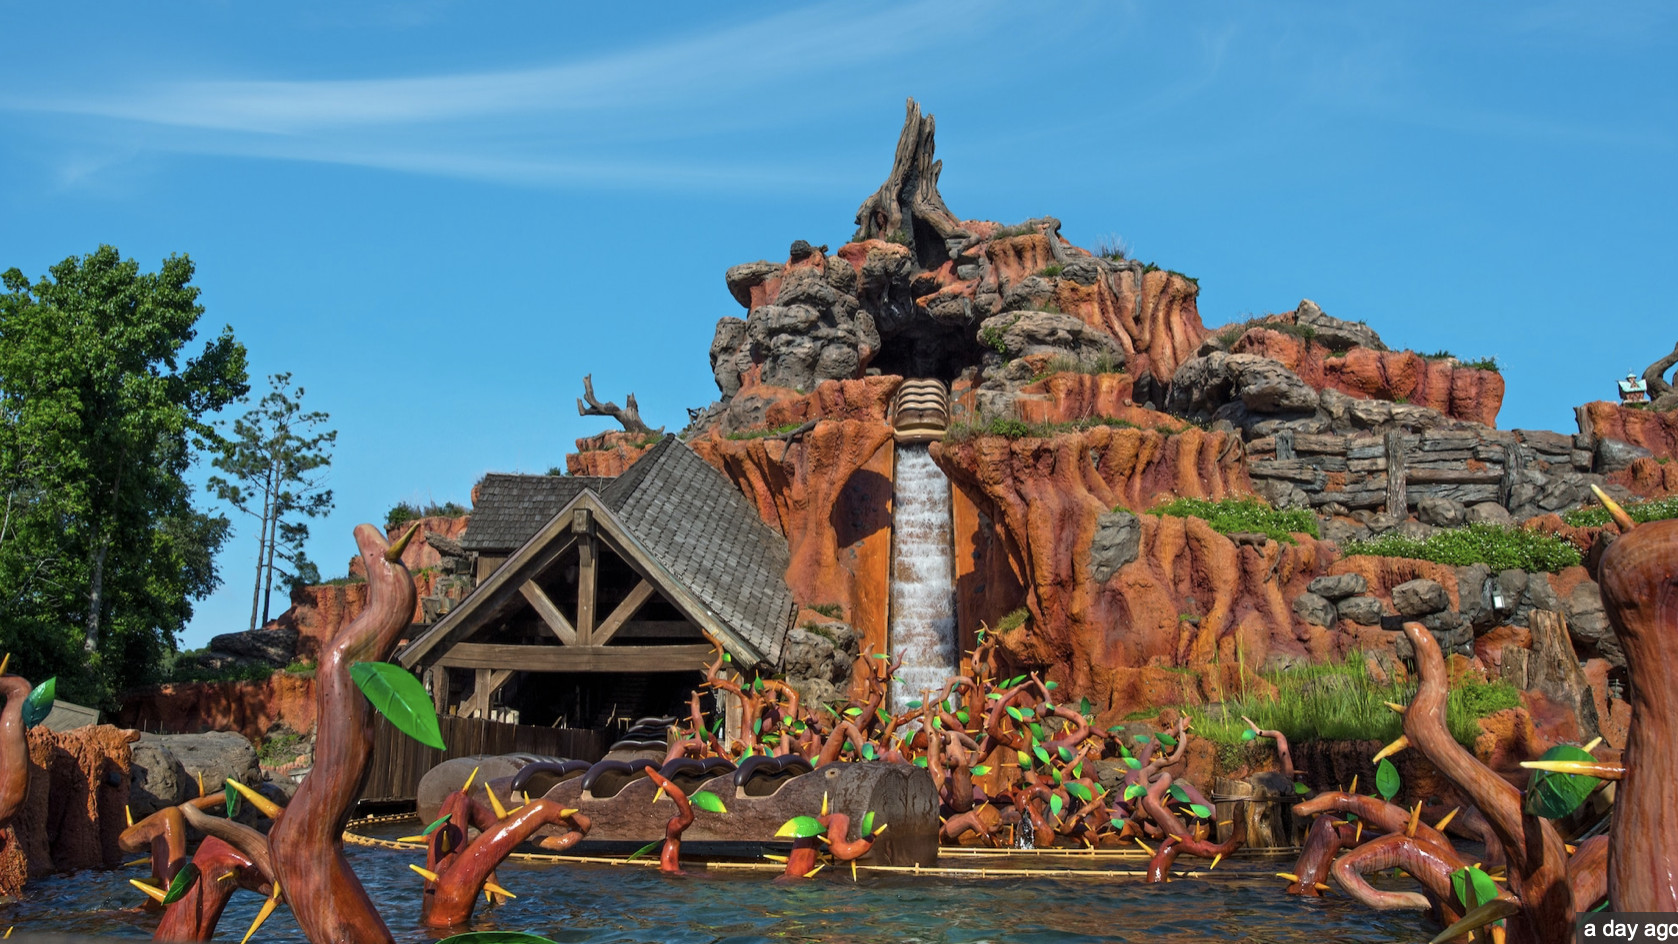 Closing Date Announced for Splash Mountain at Disneyland